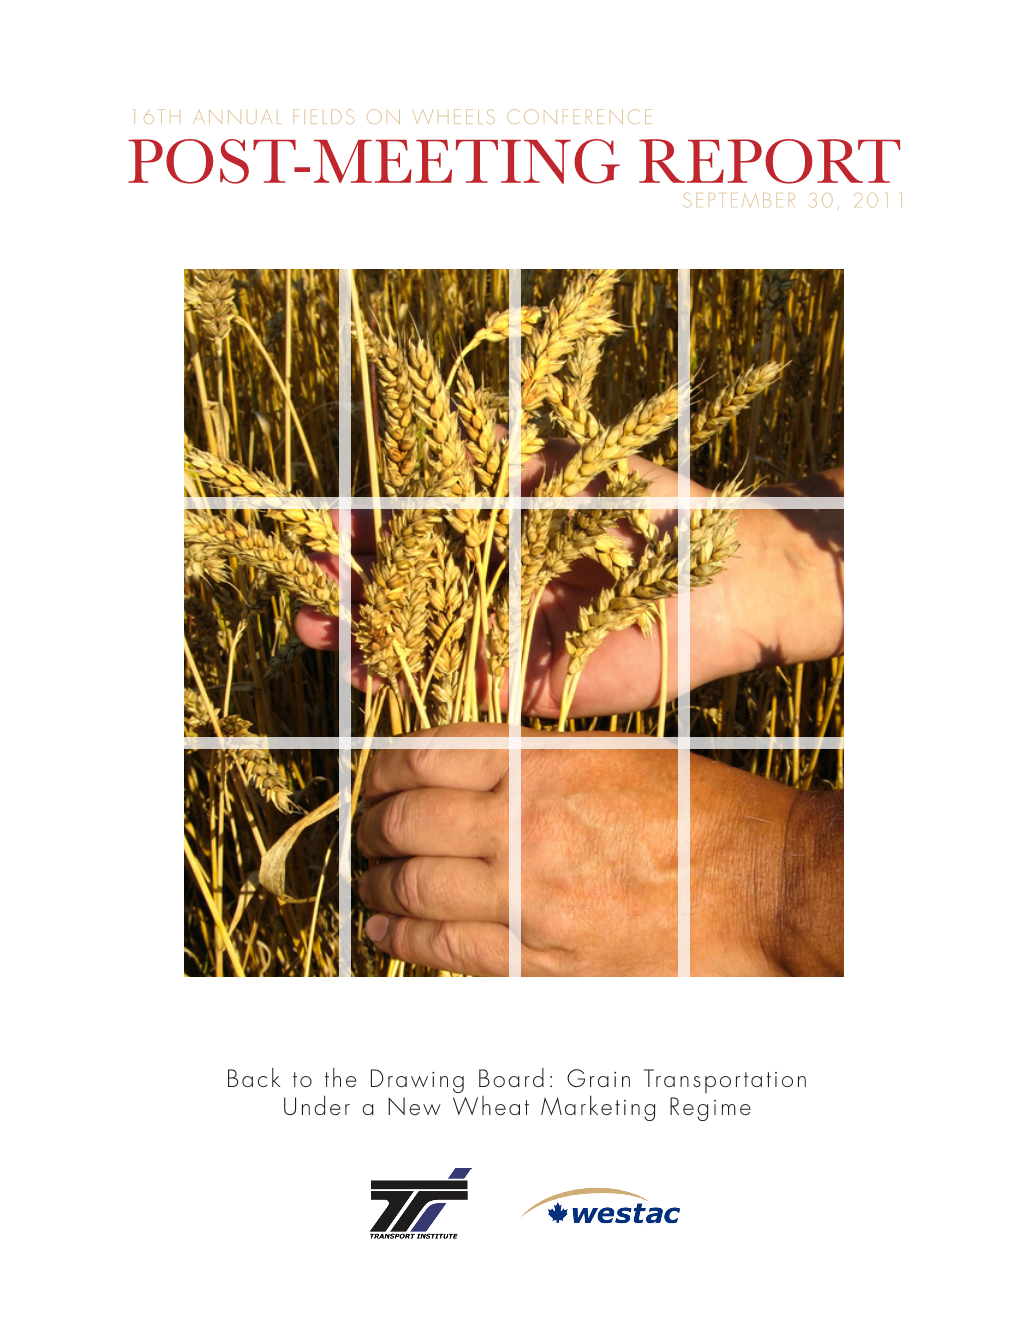 Post-Meeting Report September 30, 2011